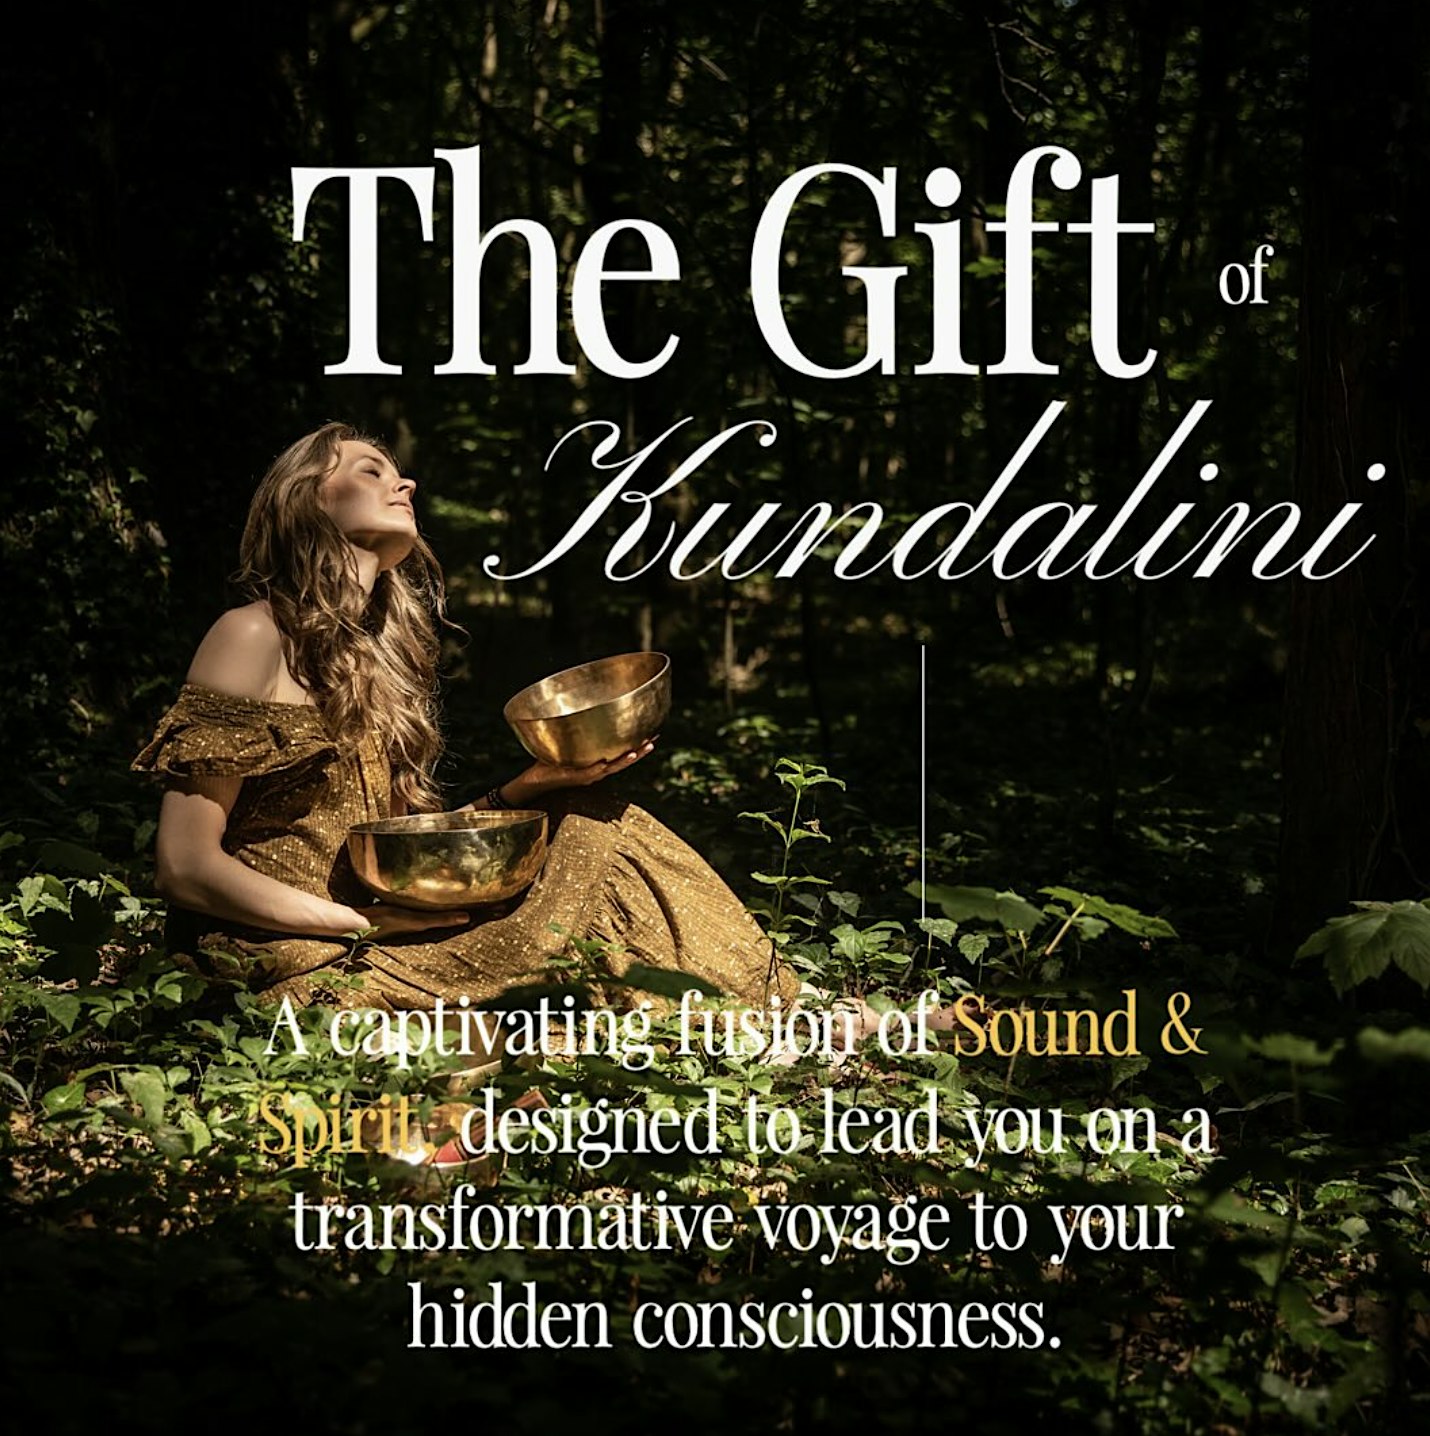 [FULL MOON] Kundalini Activation & Sound Healing Ceremony | Amsterdam